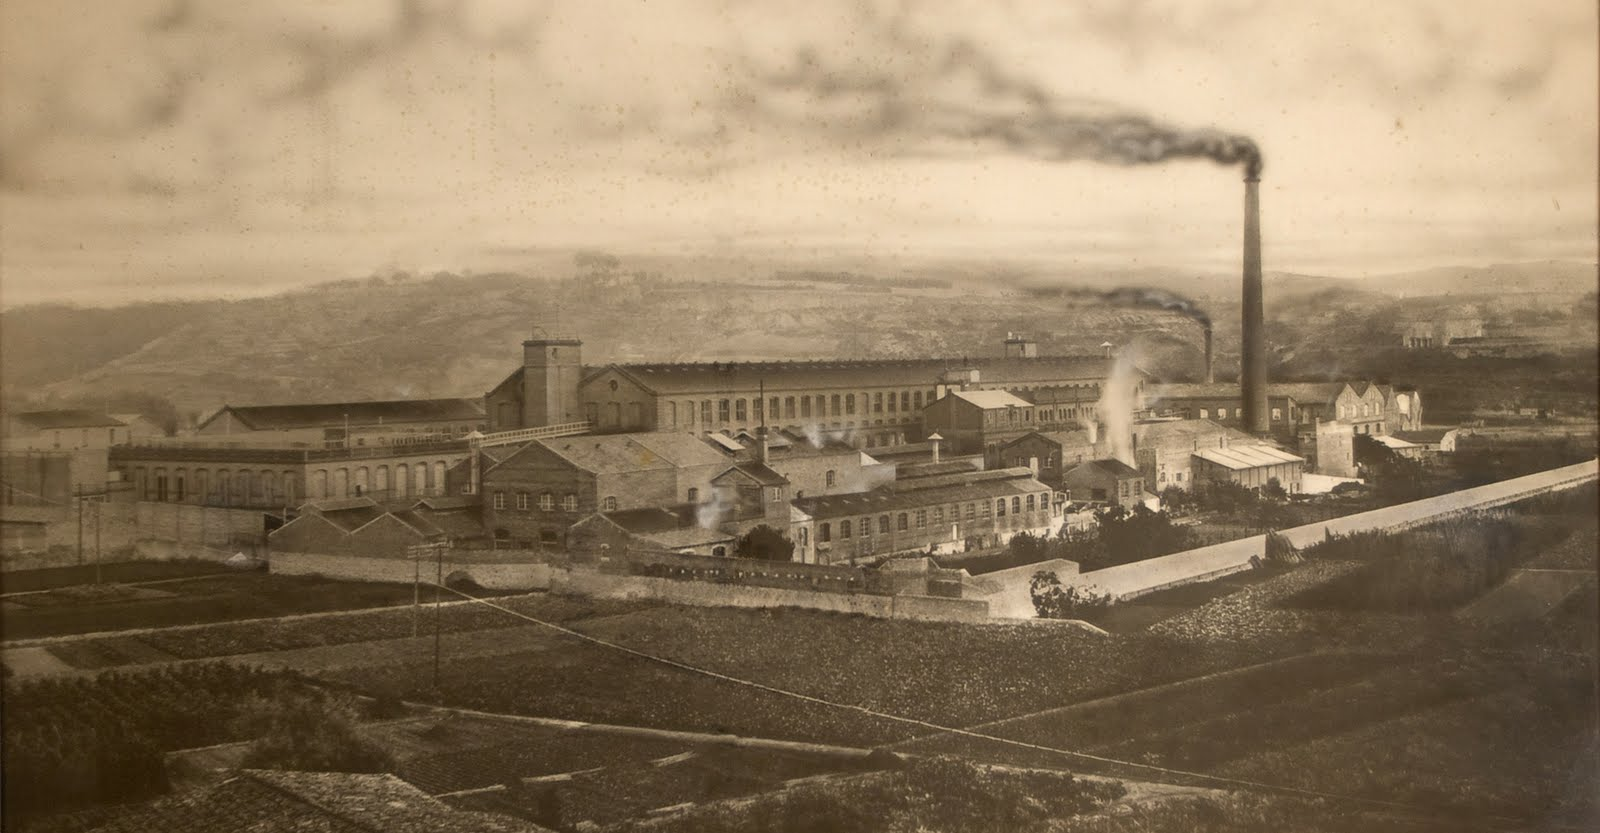 Photo of Juan Batlló’s factory in Barcelona, Catalonia (credits: Wikimedia)